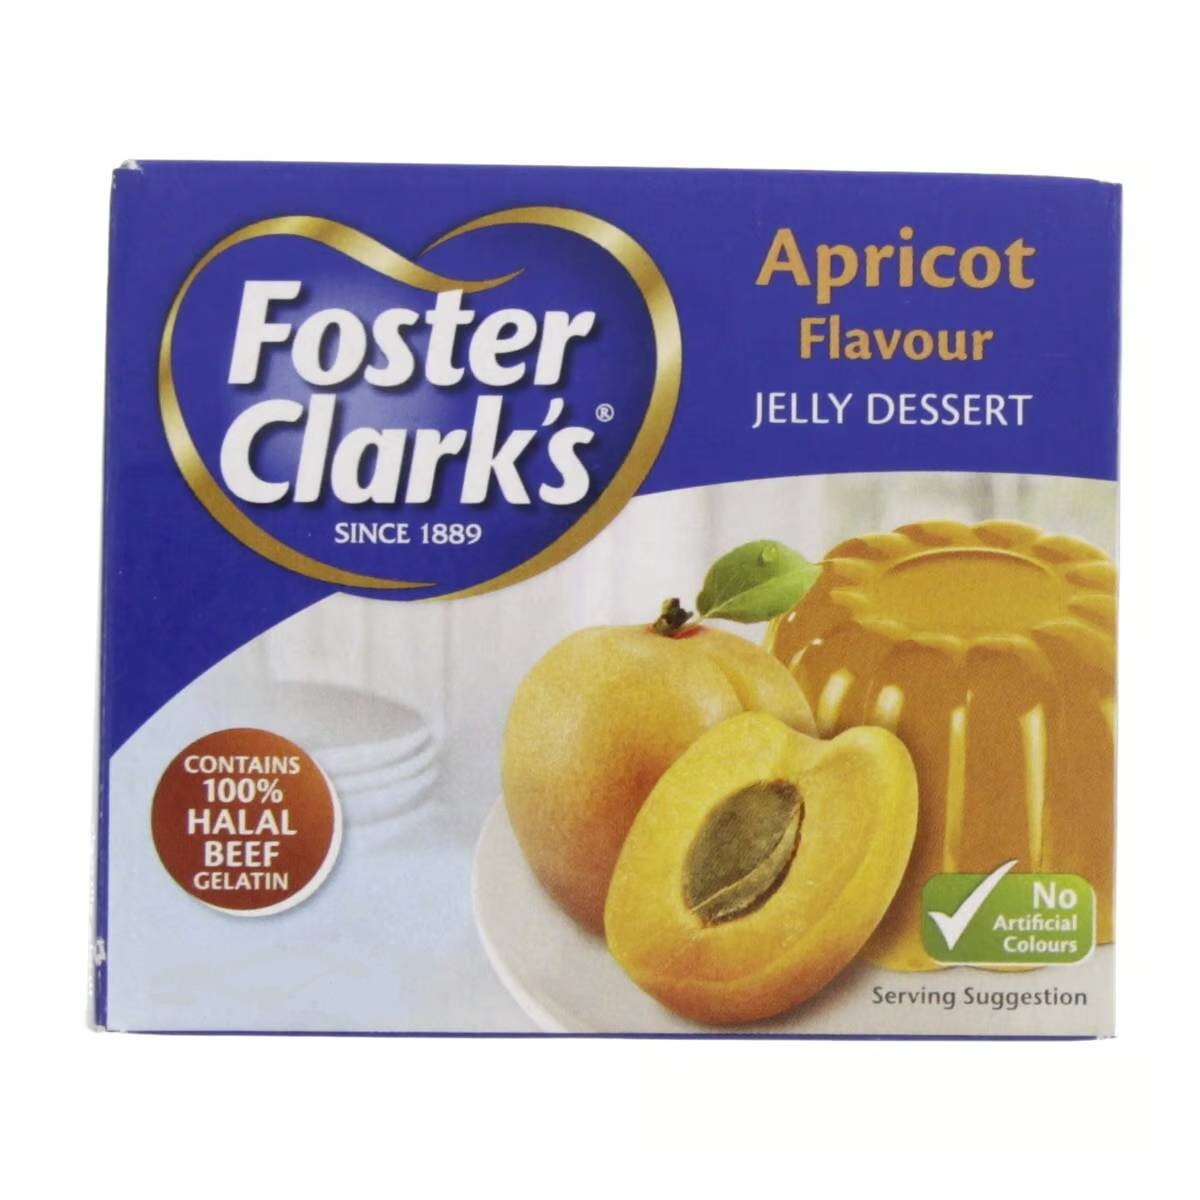 Foster Clark's Apricot Flavour Jelly Dessert 80 g